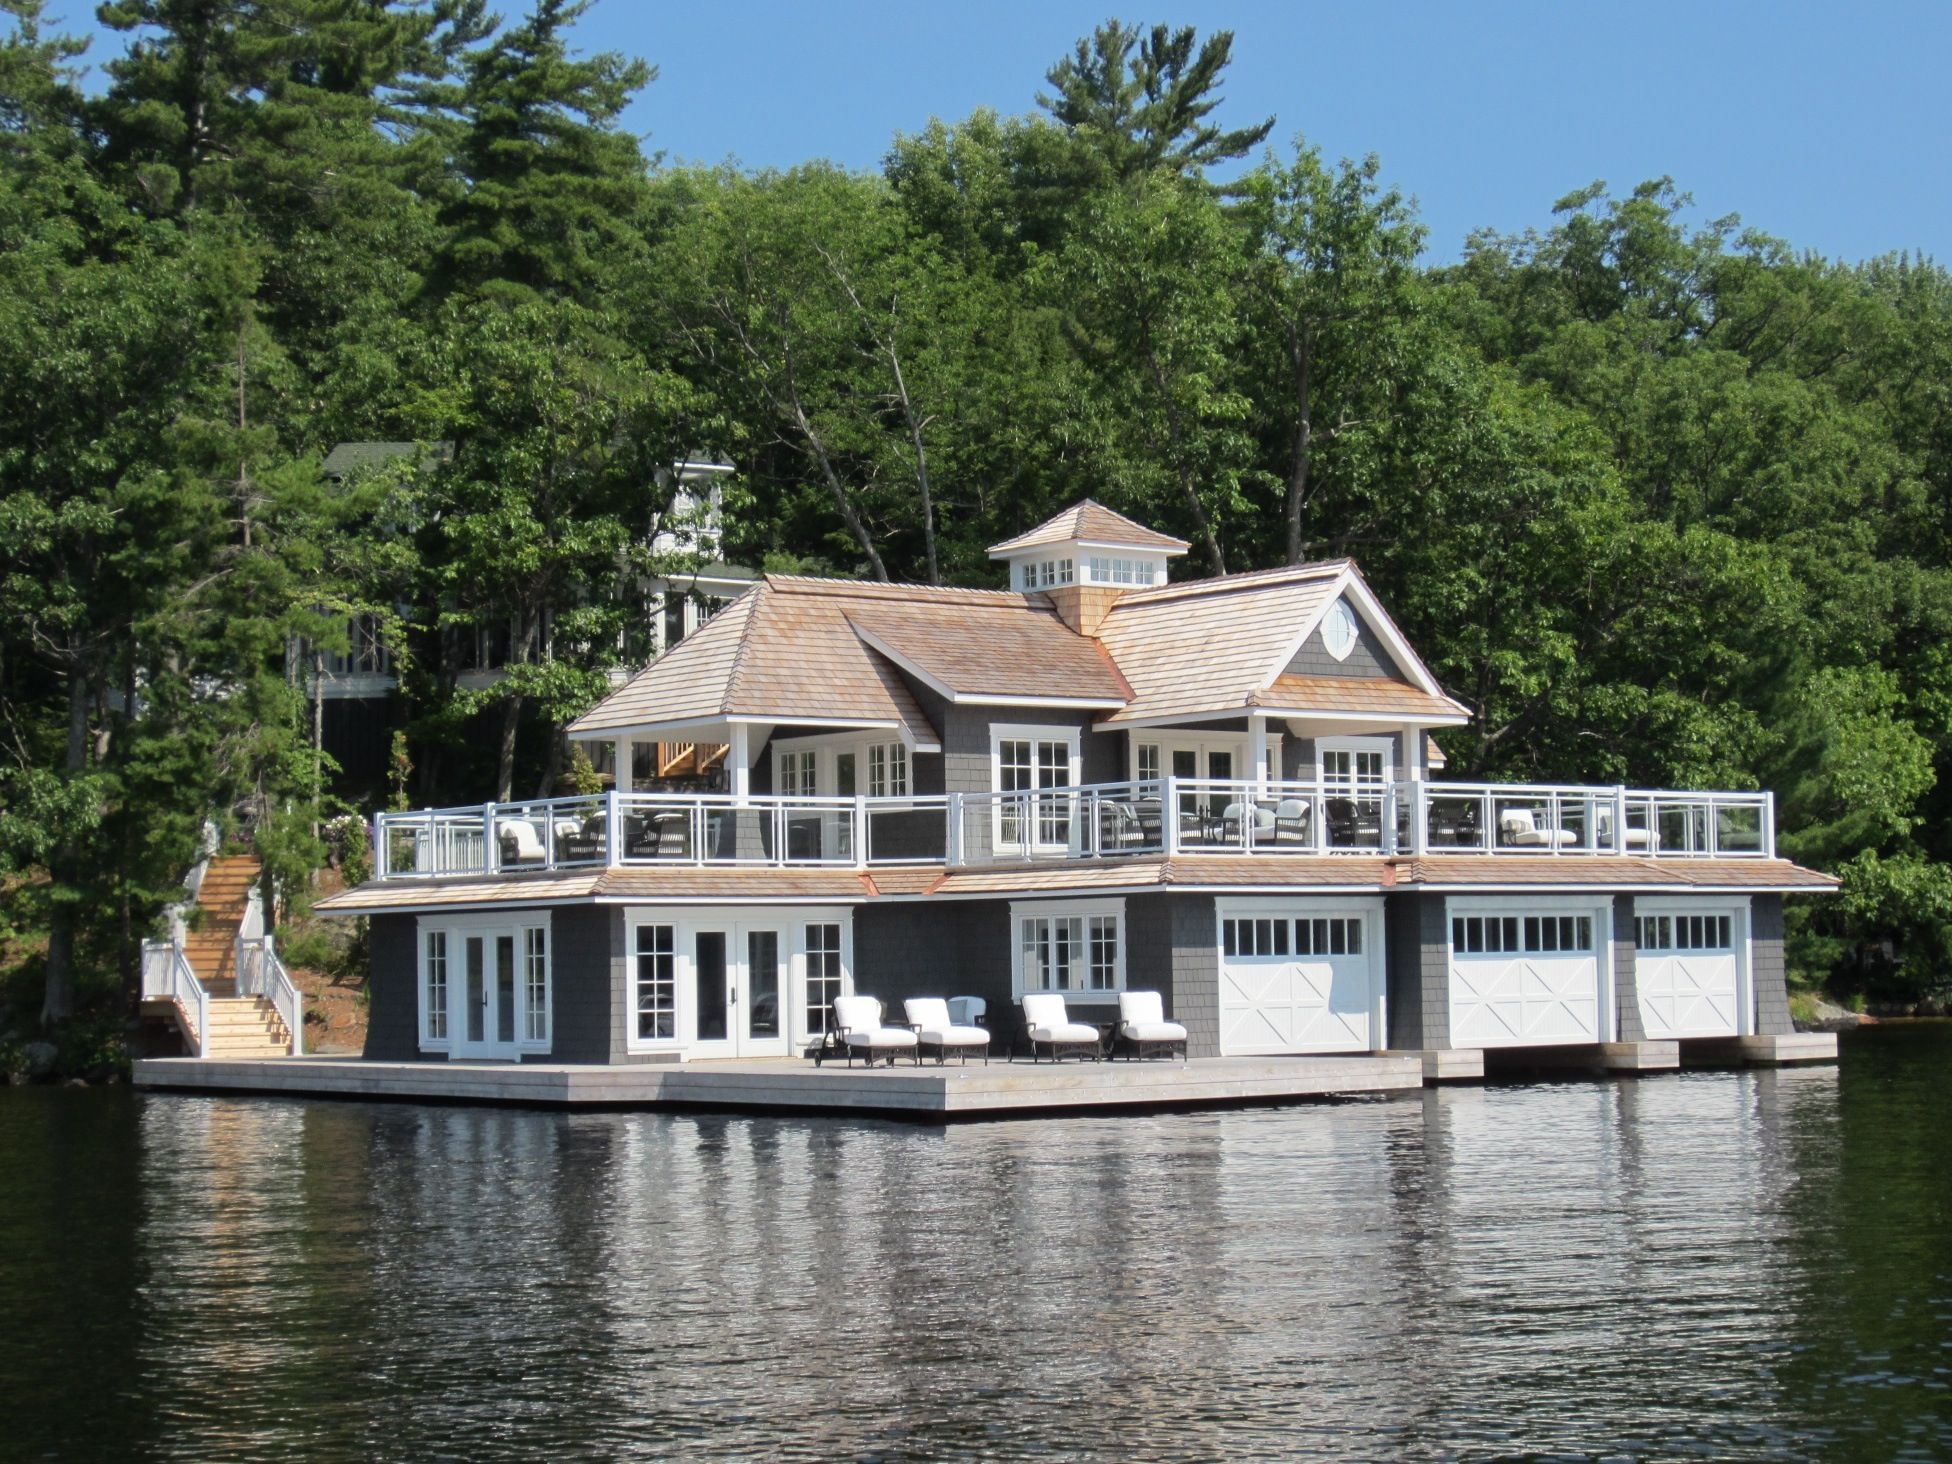 This is a beautiful boathouse on Muskoka Lakes, Ontario, Canada ...